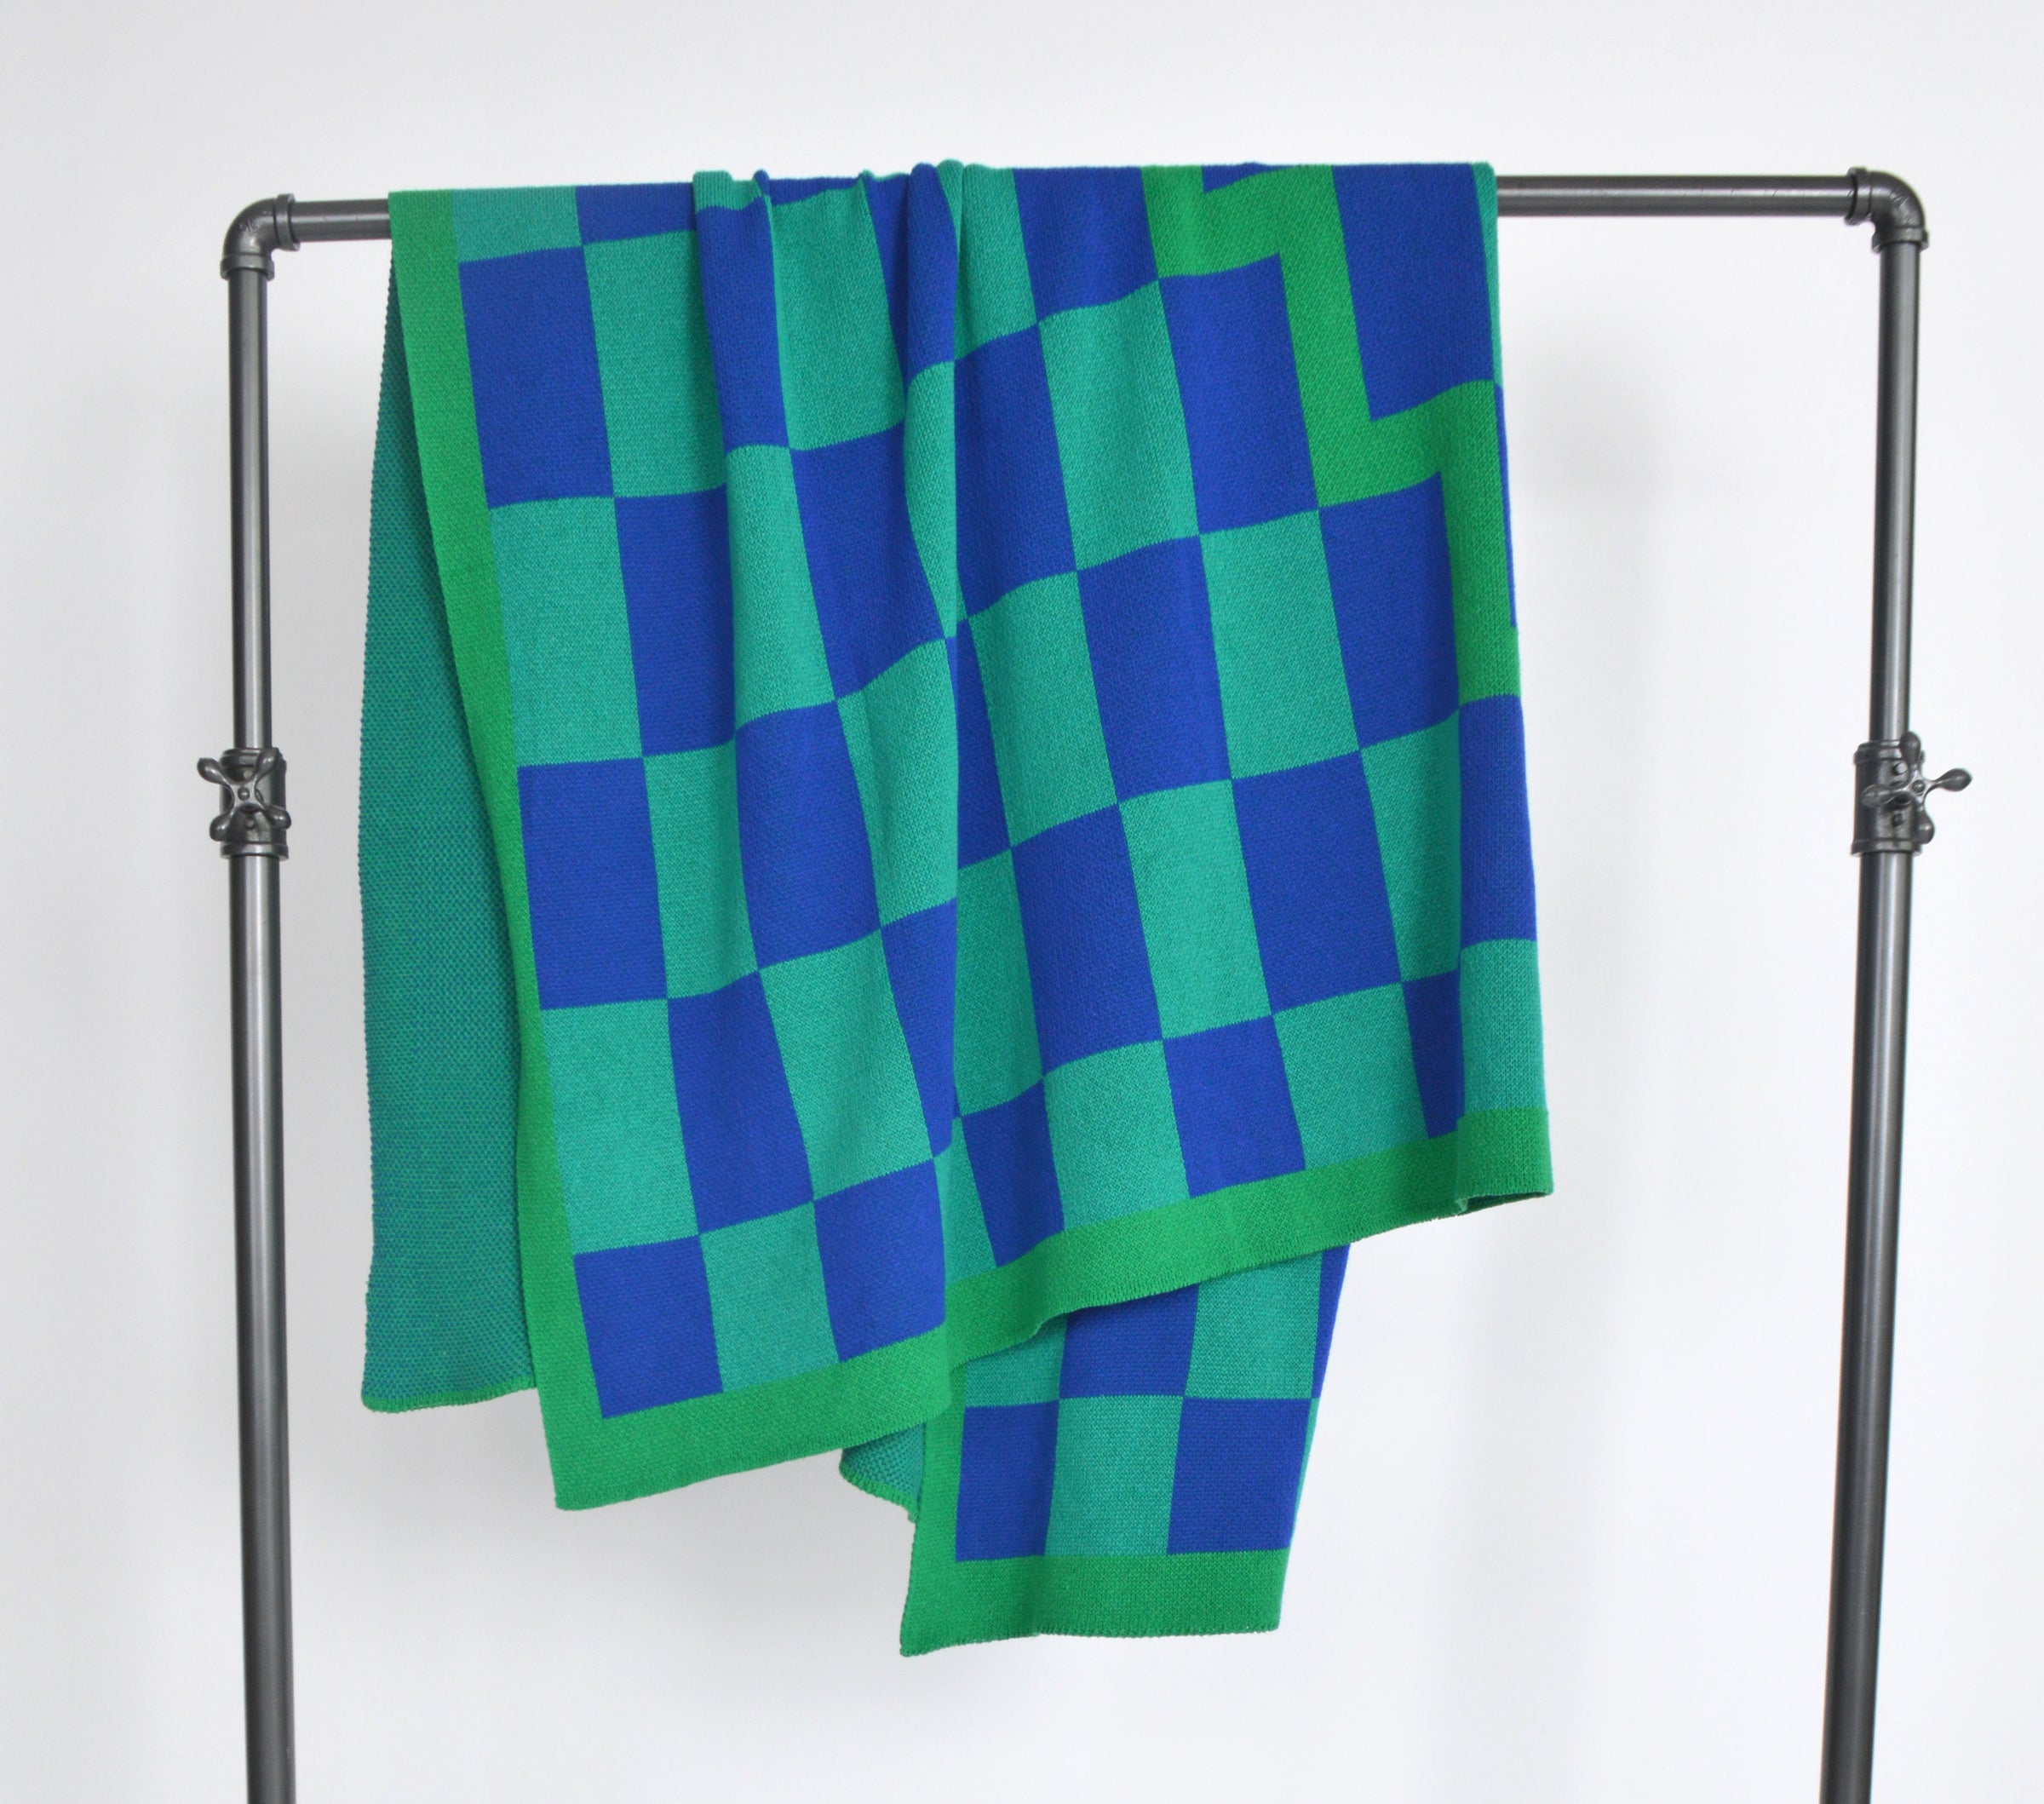 Green River Knit Blanket